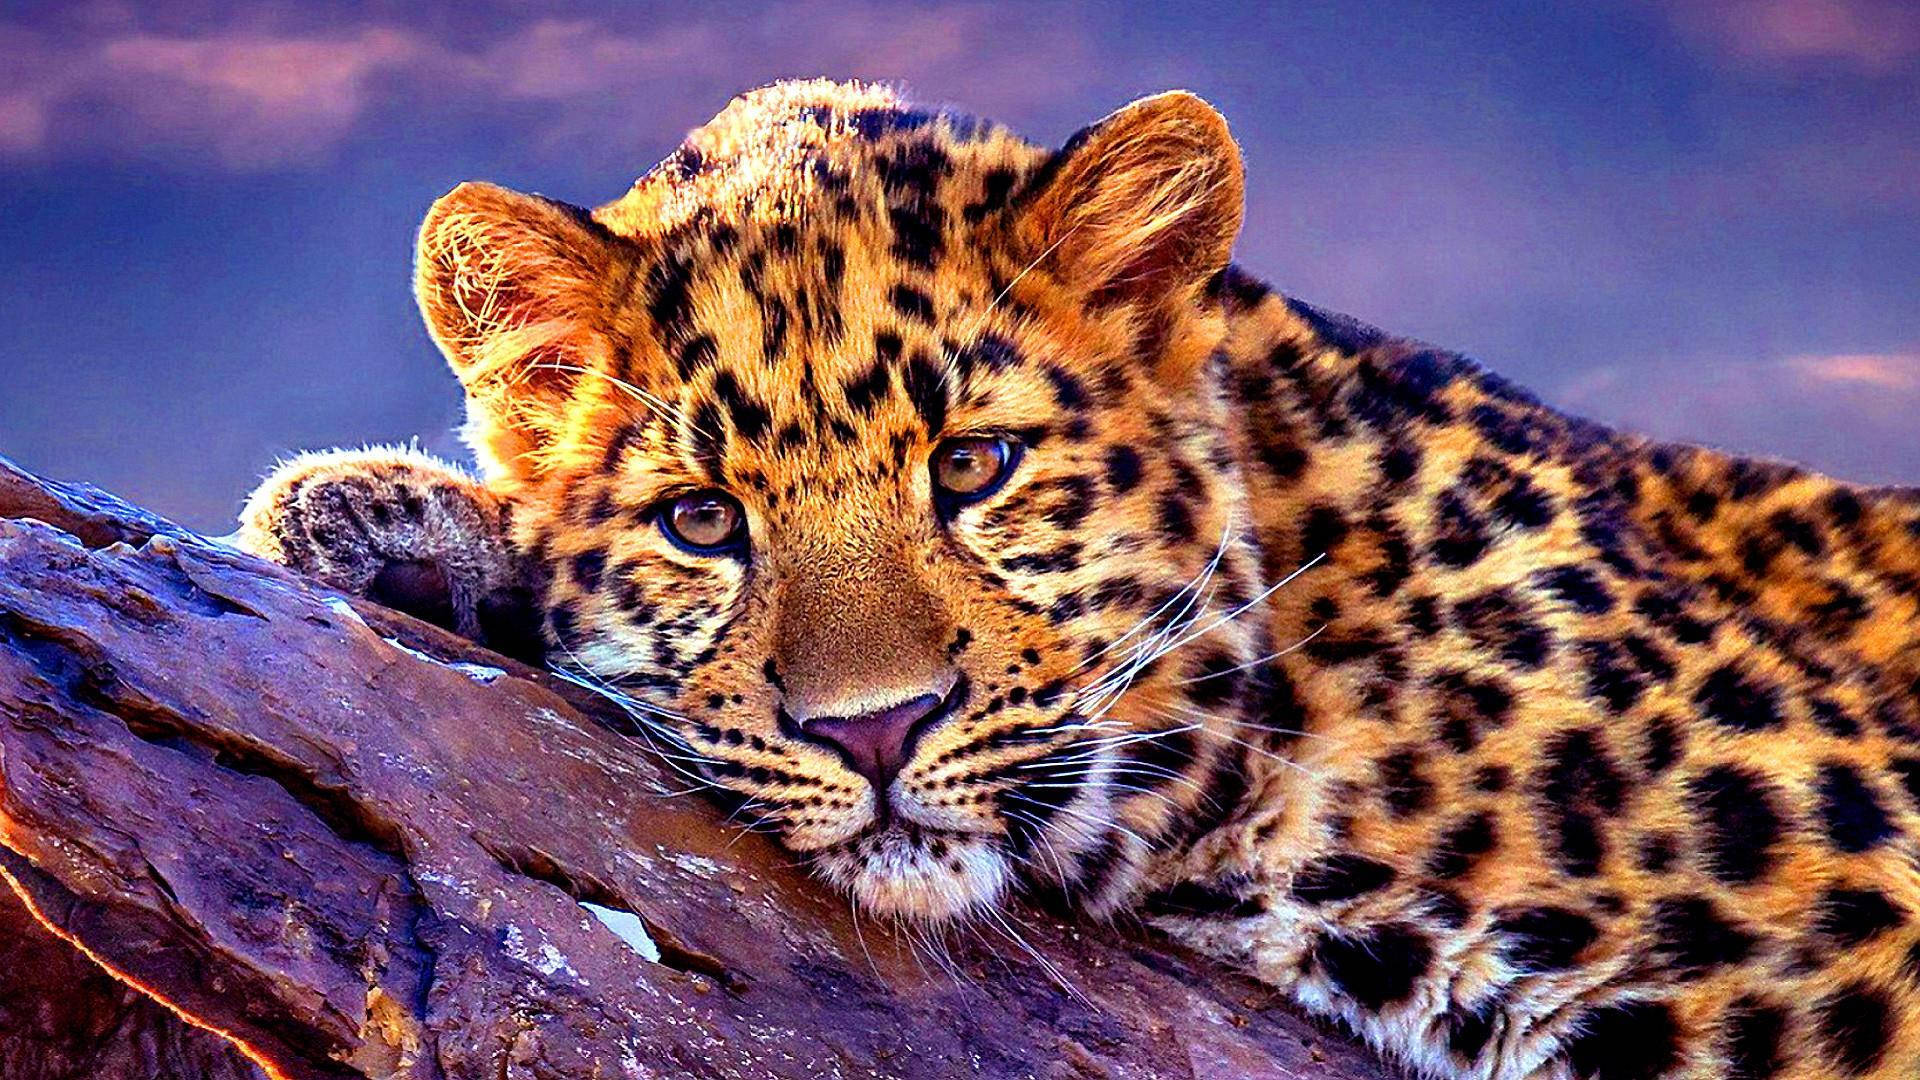 Leopard Animal Resting On Damp Rock Background